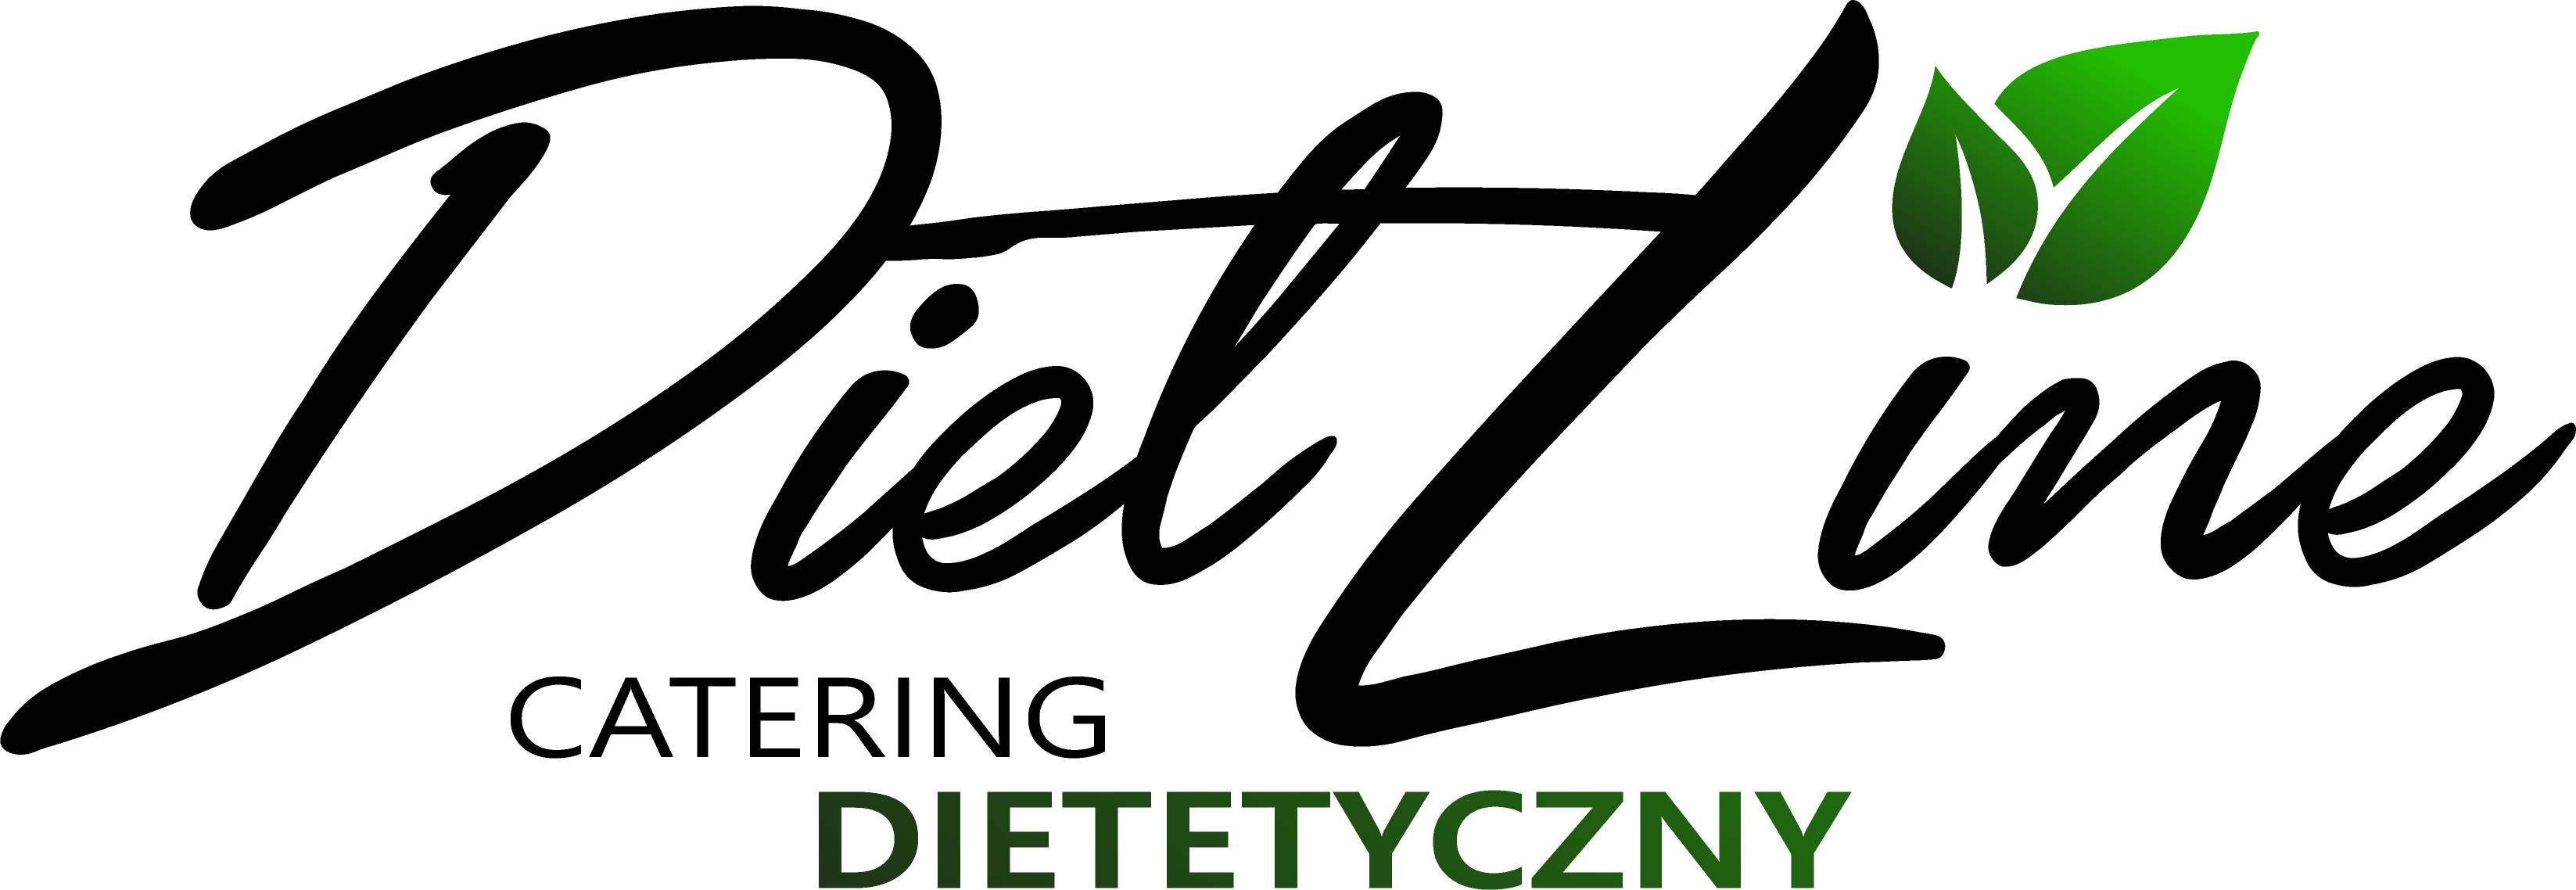 Drukarnia Lublin - logotyp klienta drukarni - Katering Dietetyczny DietLine